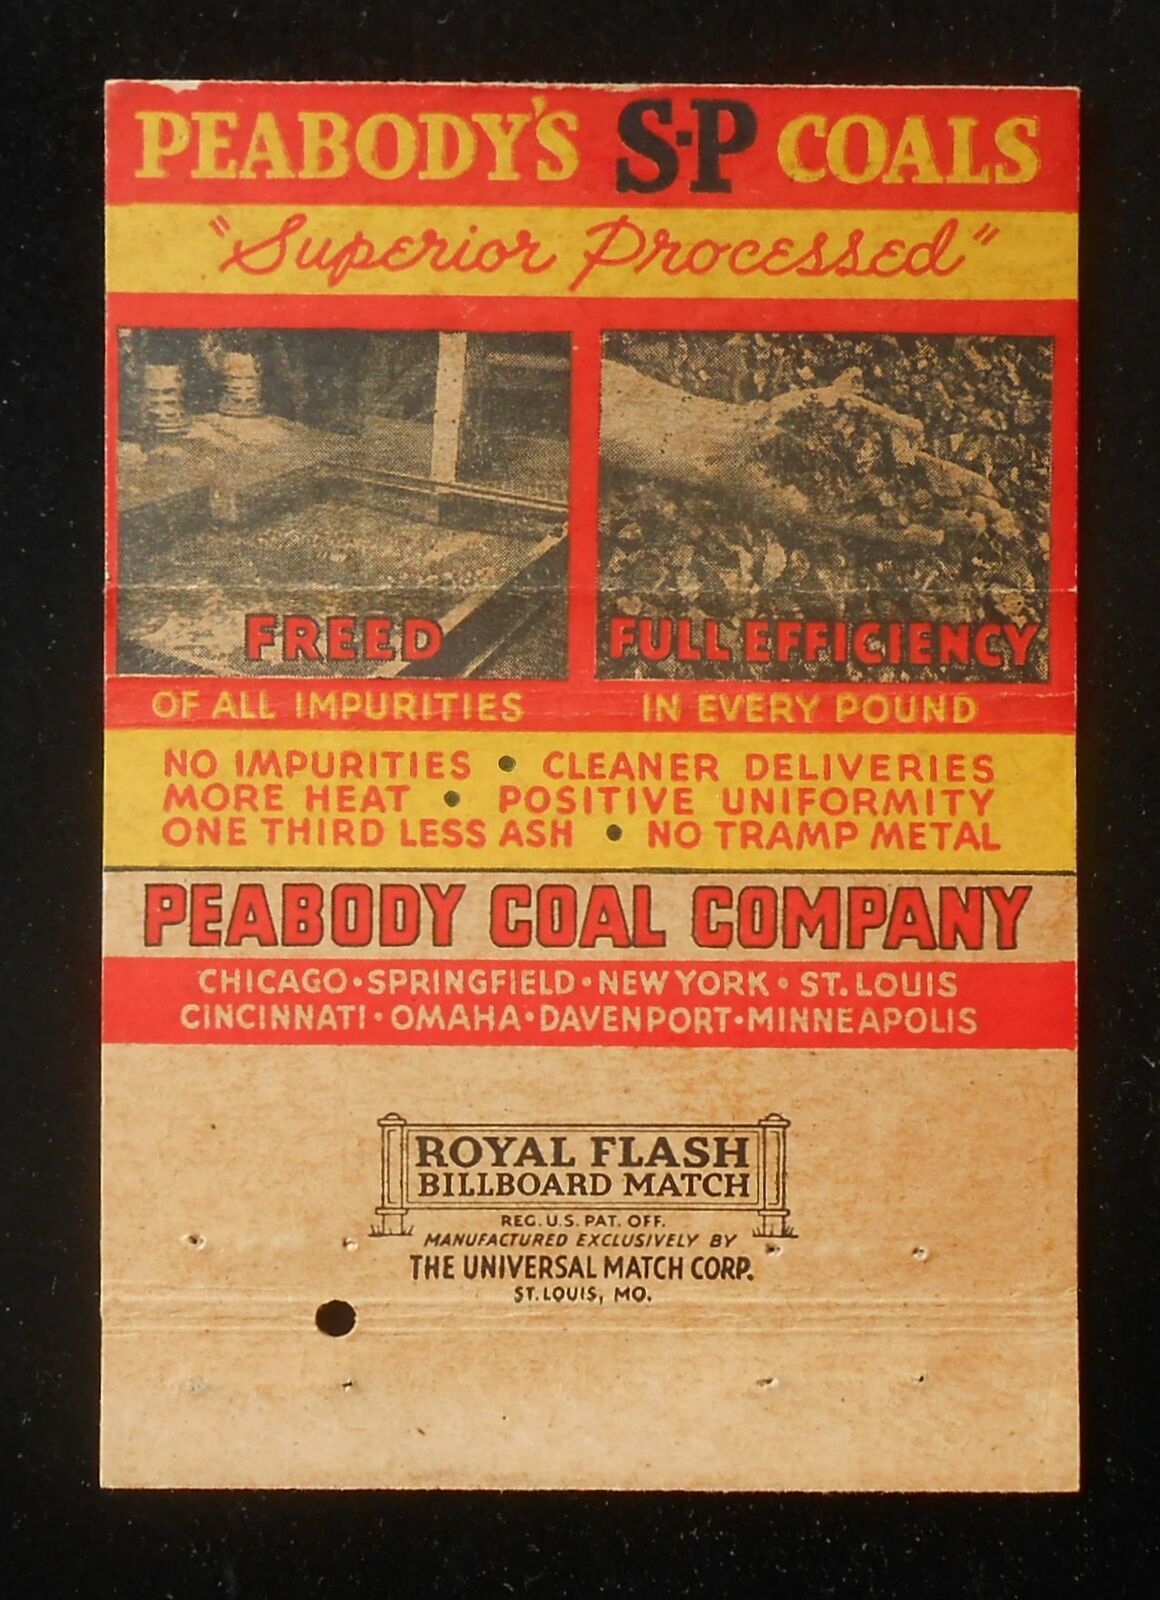 1940s S-P Coals Superior Processed Peabody Coal Company Springfield Chicago IL